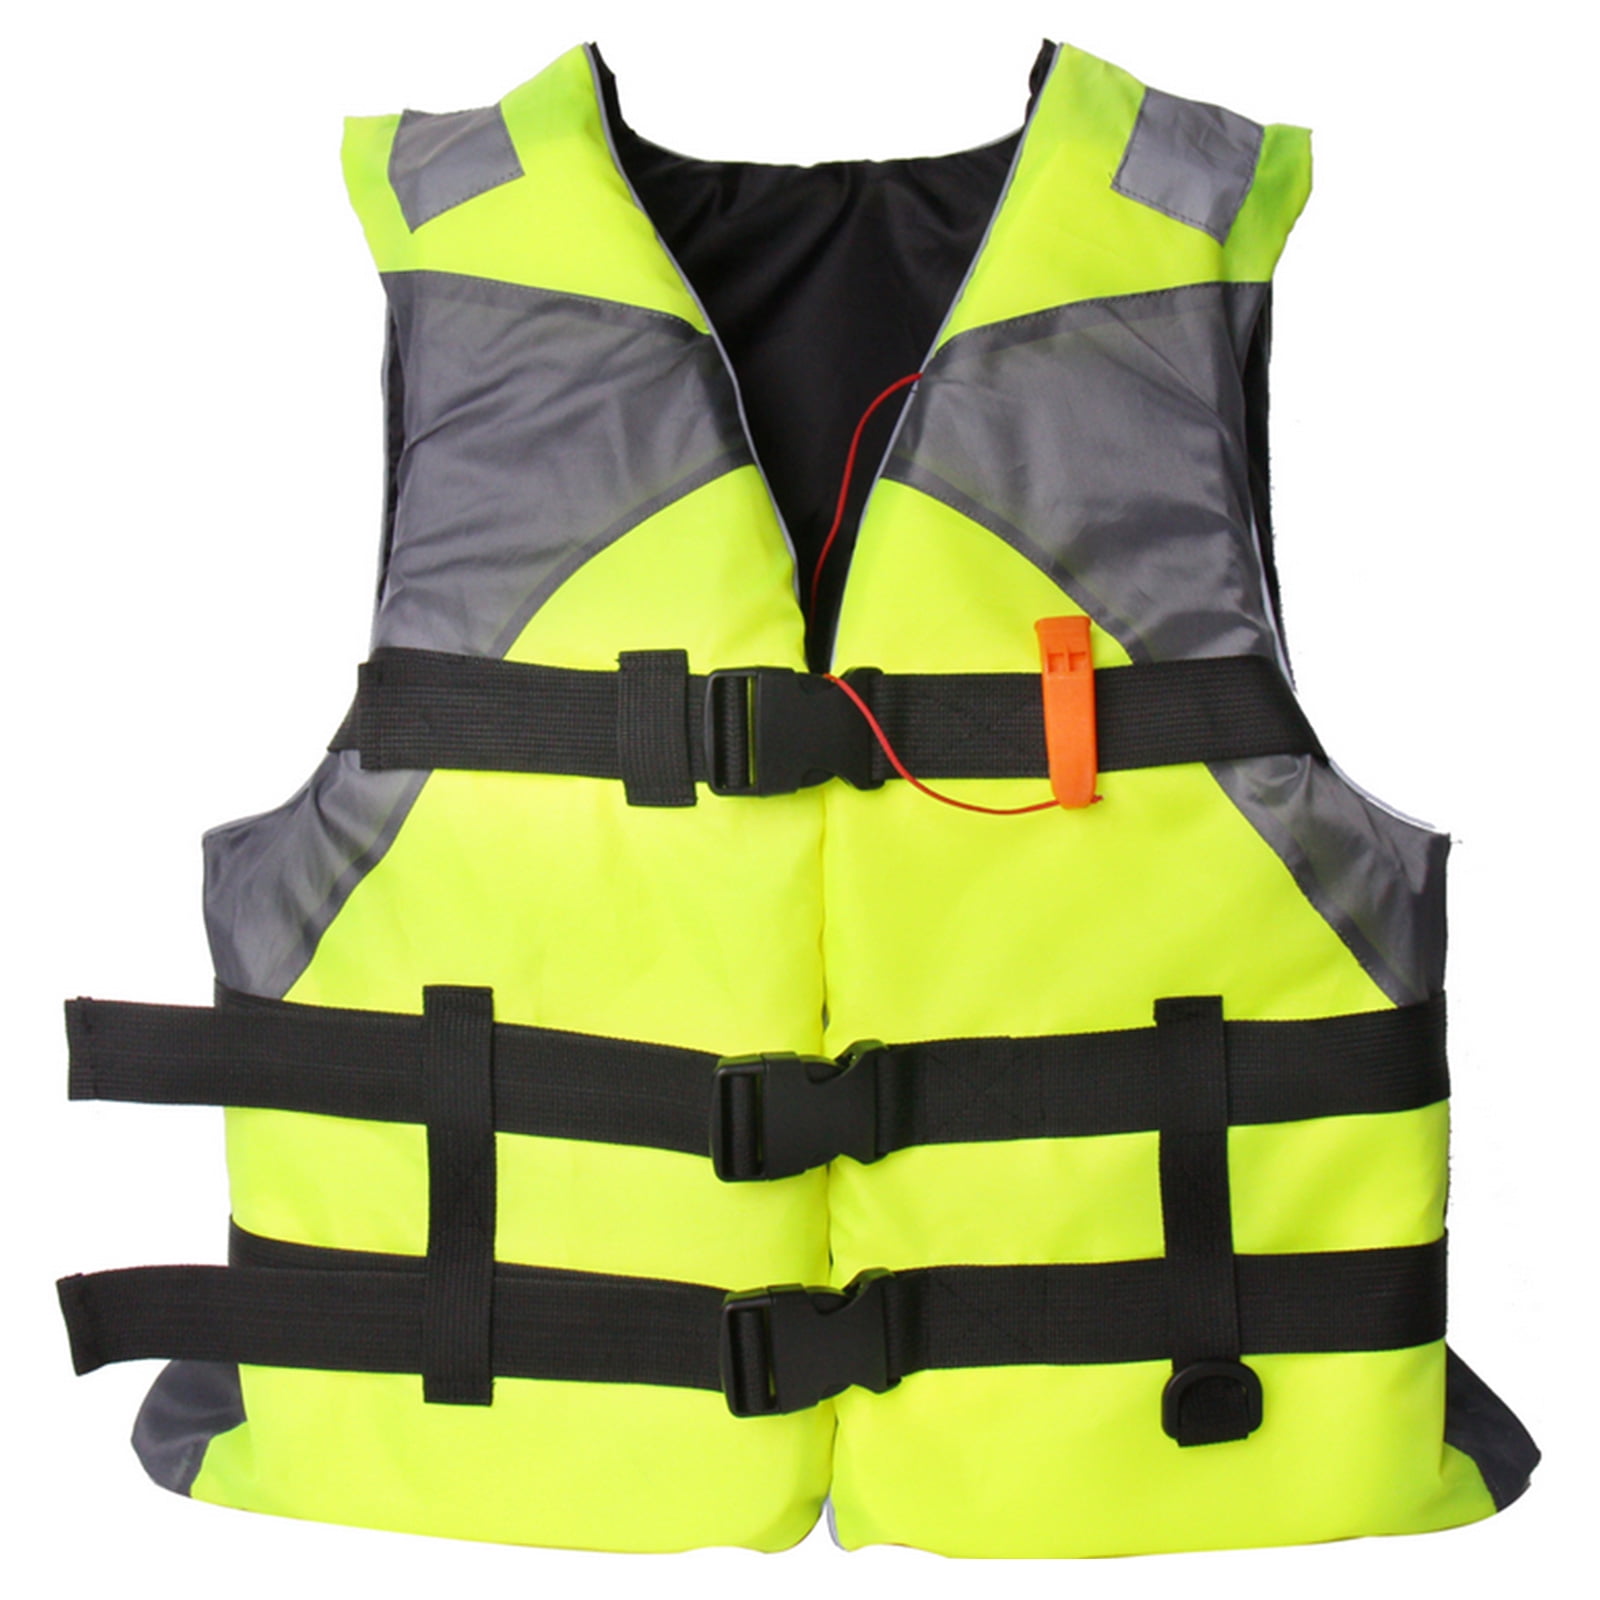 Lightweight Neoprene Green High Visibility Buoyancy Waistcoat Life Vest for Boating Fishing Lifesaving Waistcoat